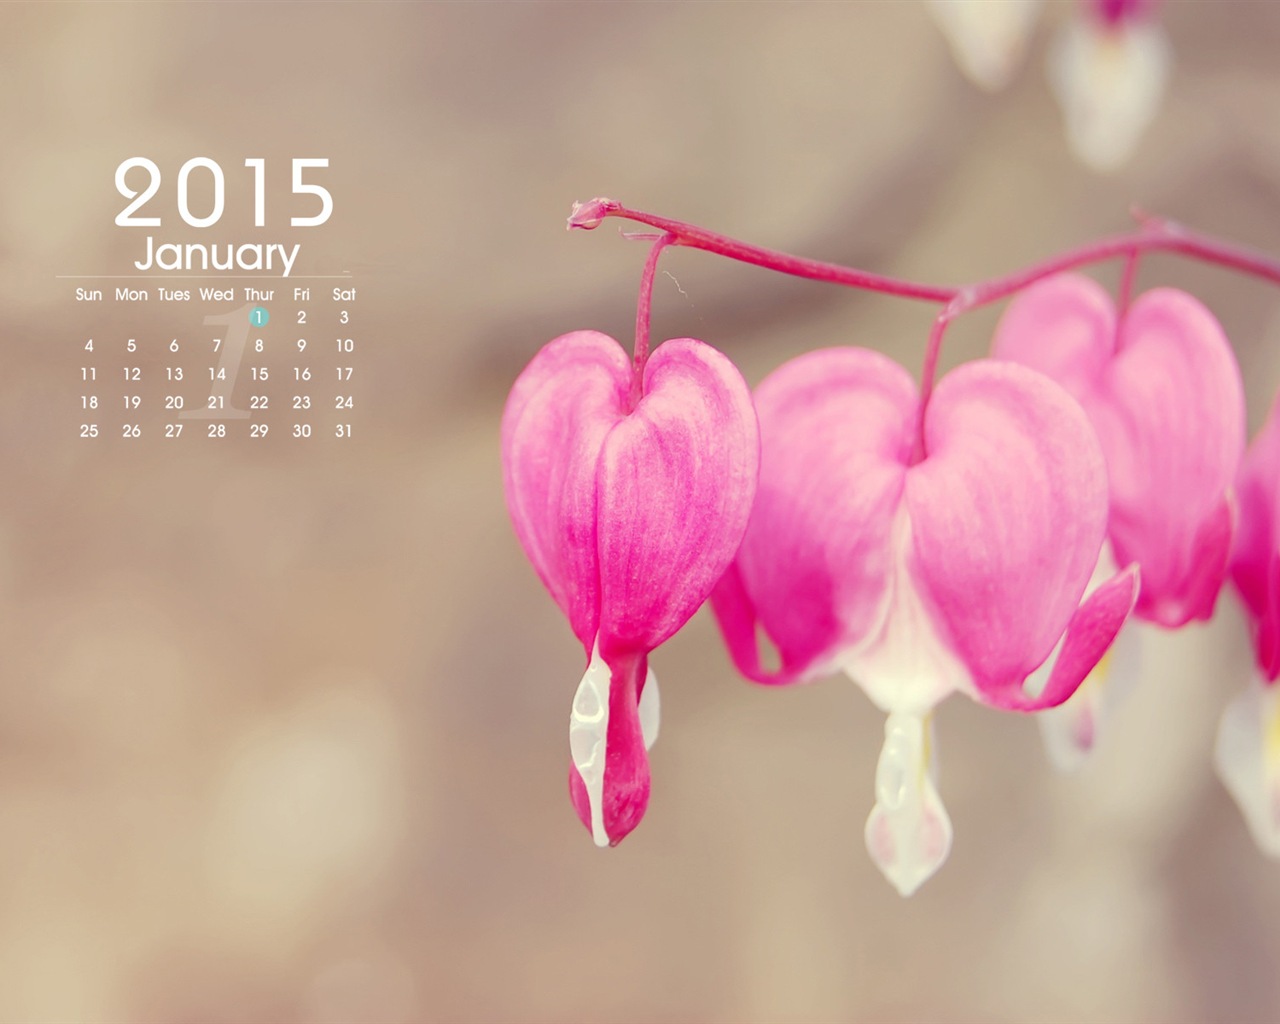 January 2015 calendar wallpaper (1) #9 - 1280x1024